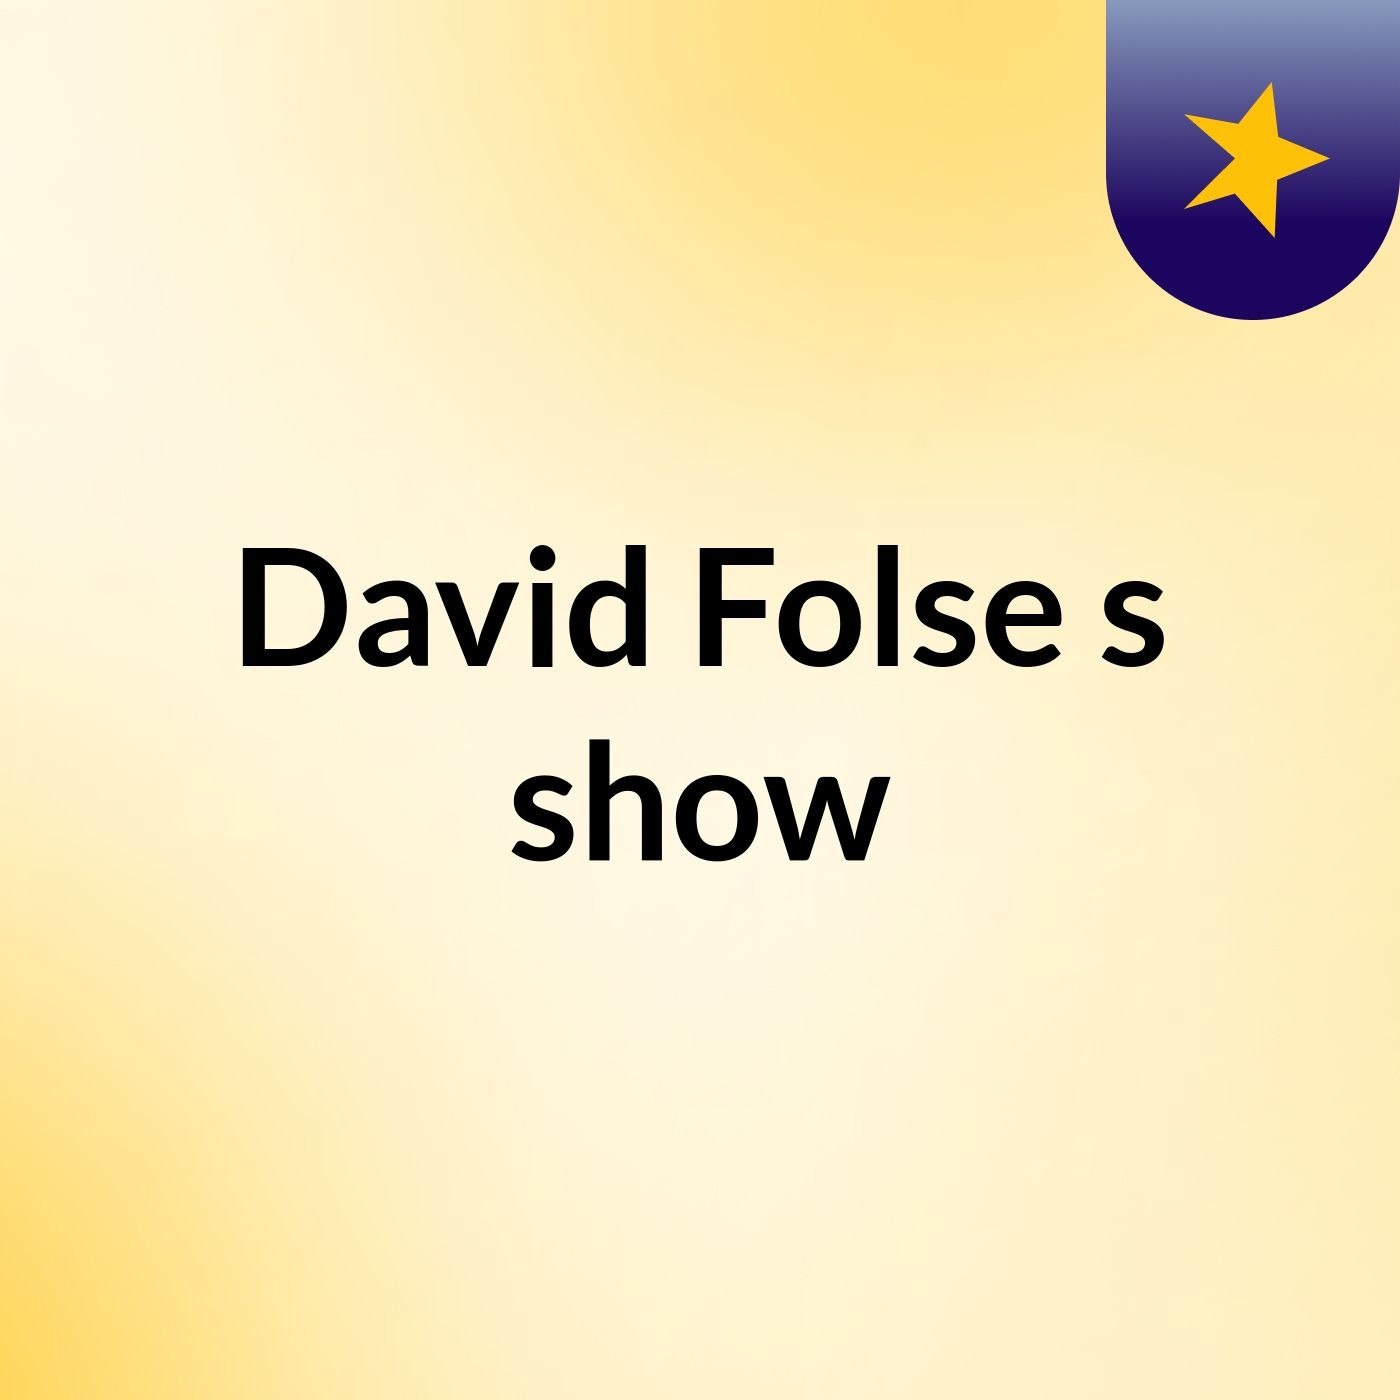 David Folse's show